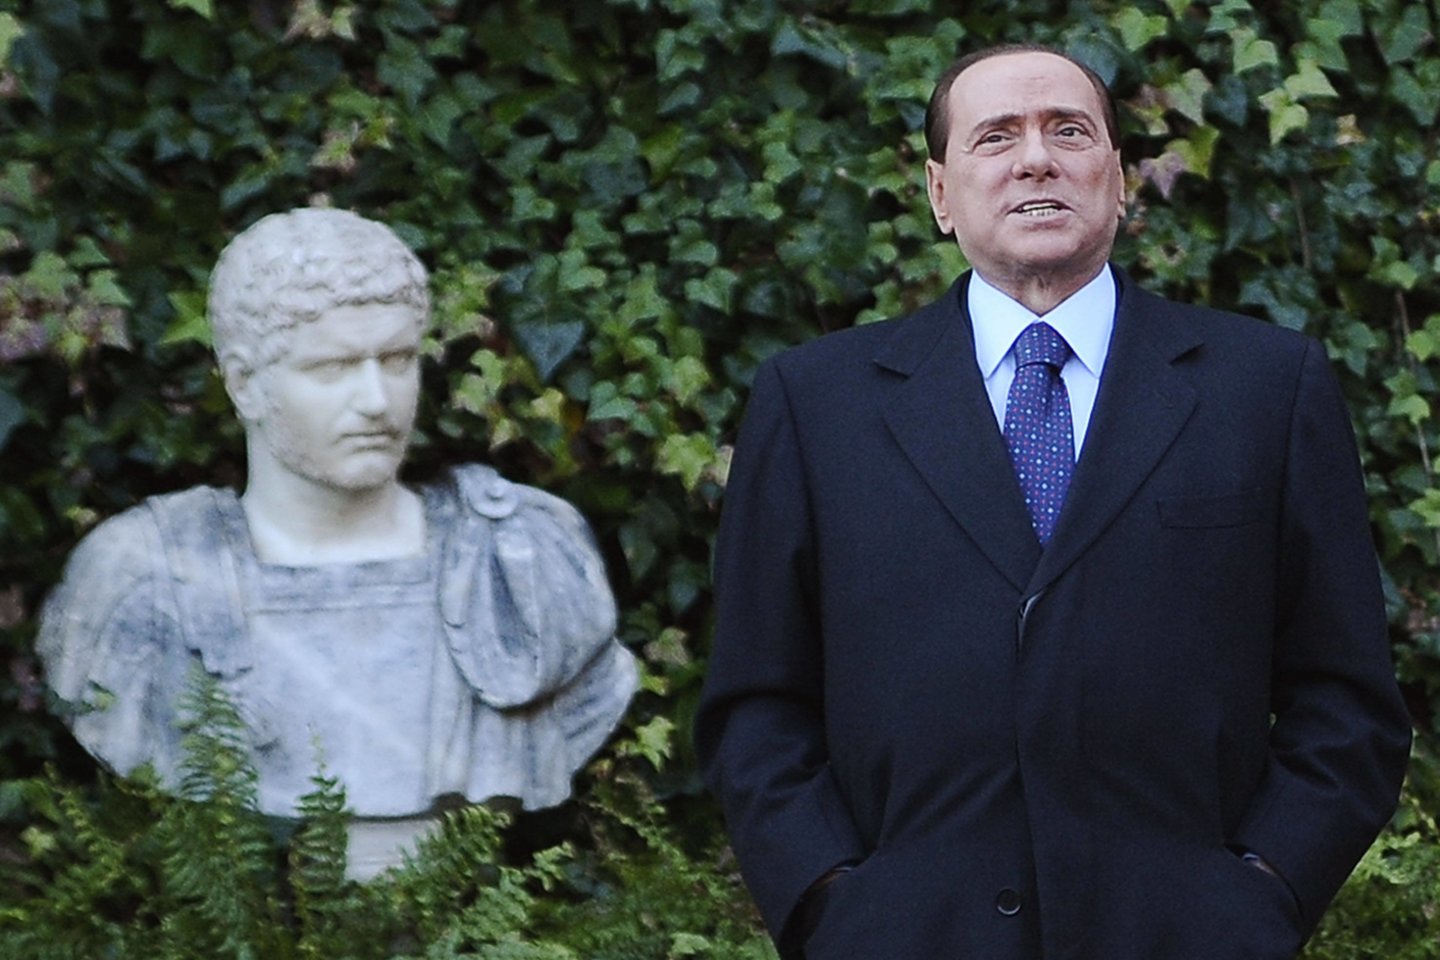  S. Berlusconi savo viloje.<br>Ipa-agency/SIPA/Scanpix nuotr.